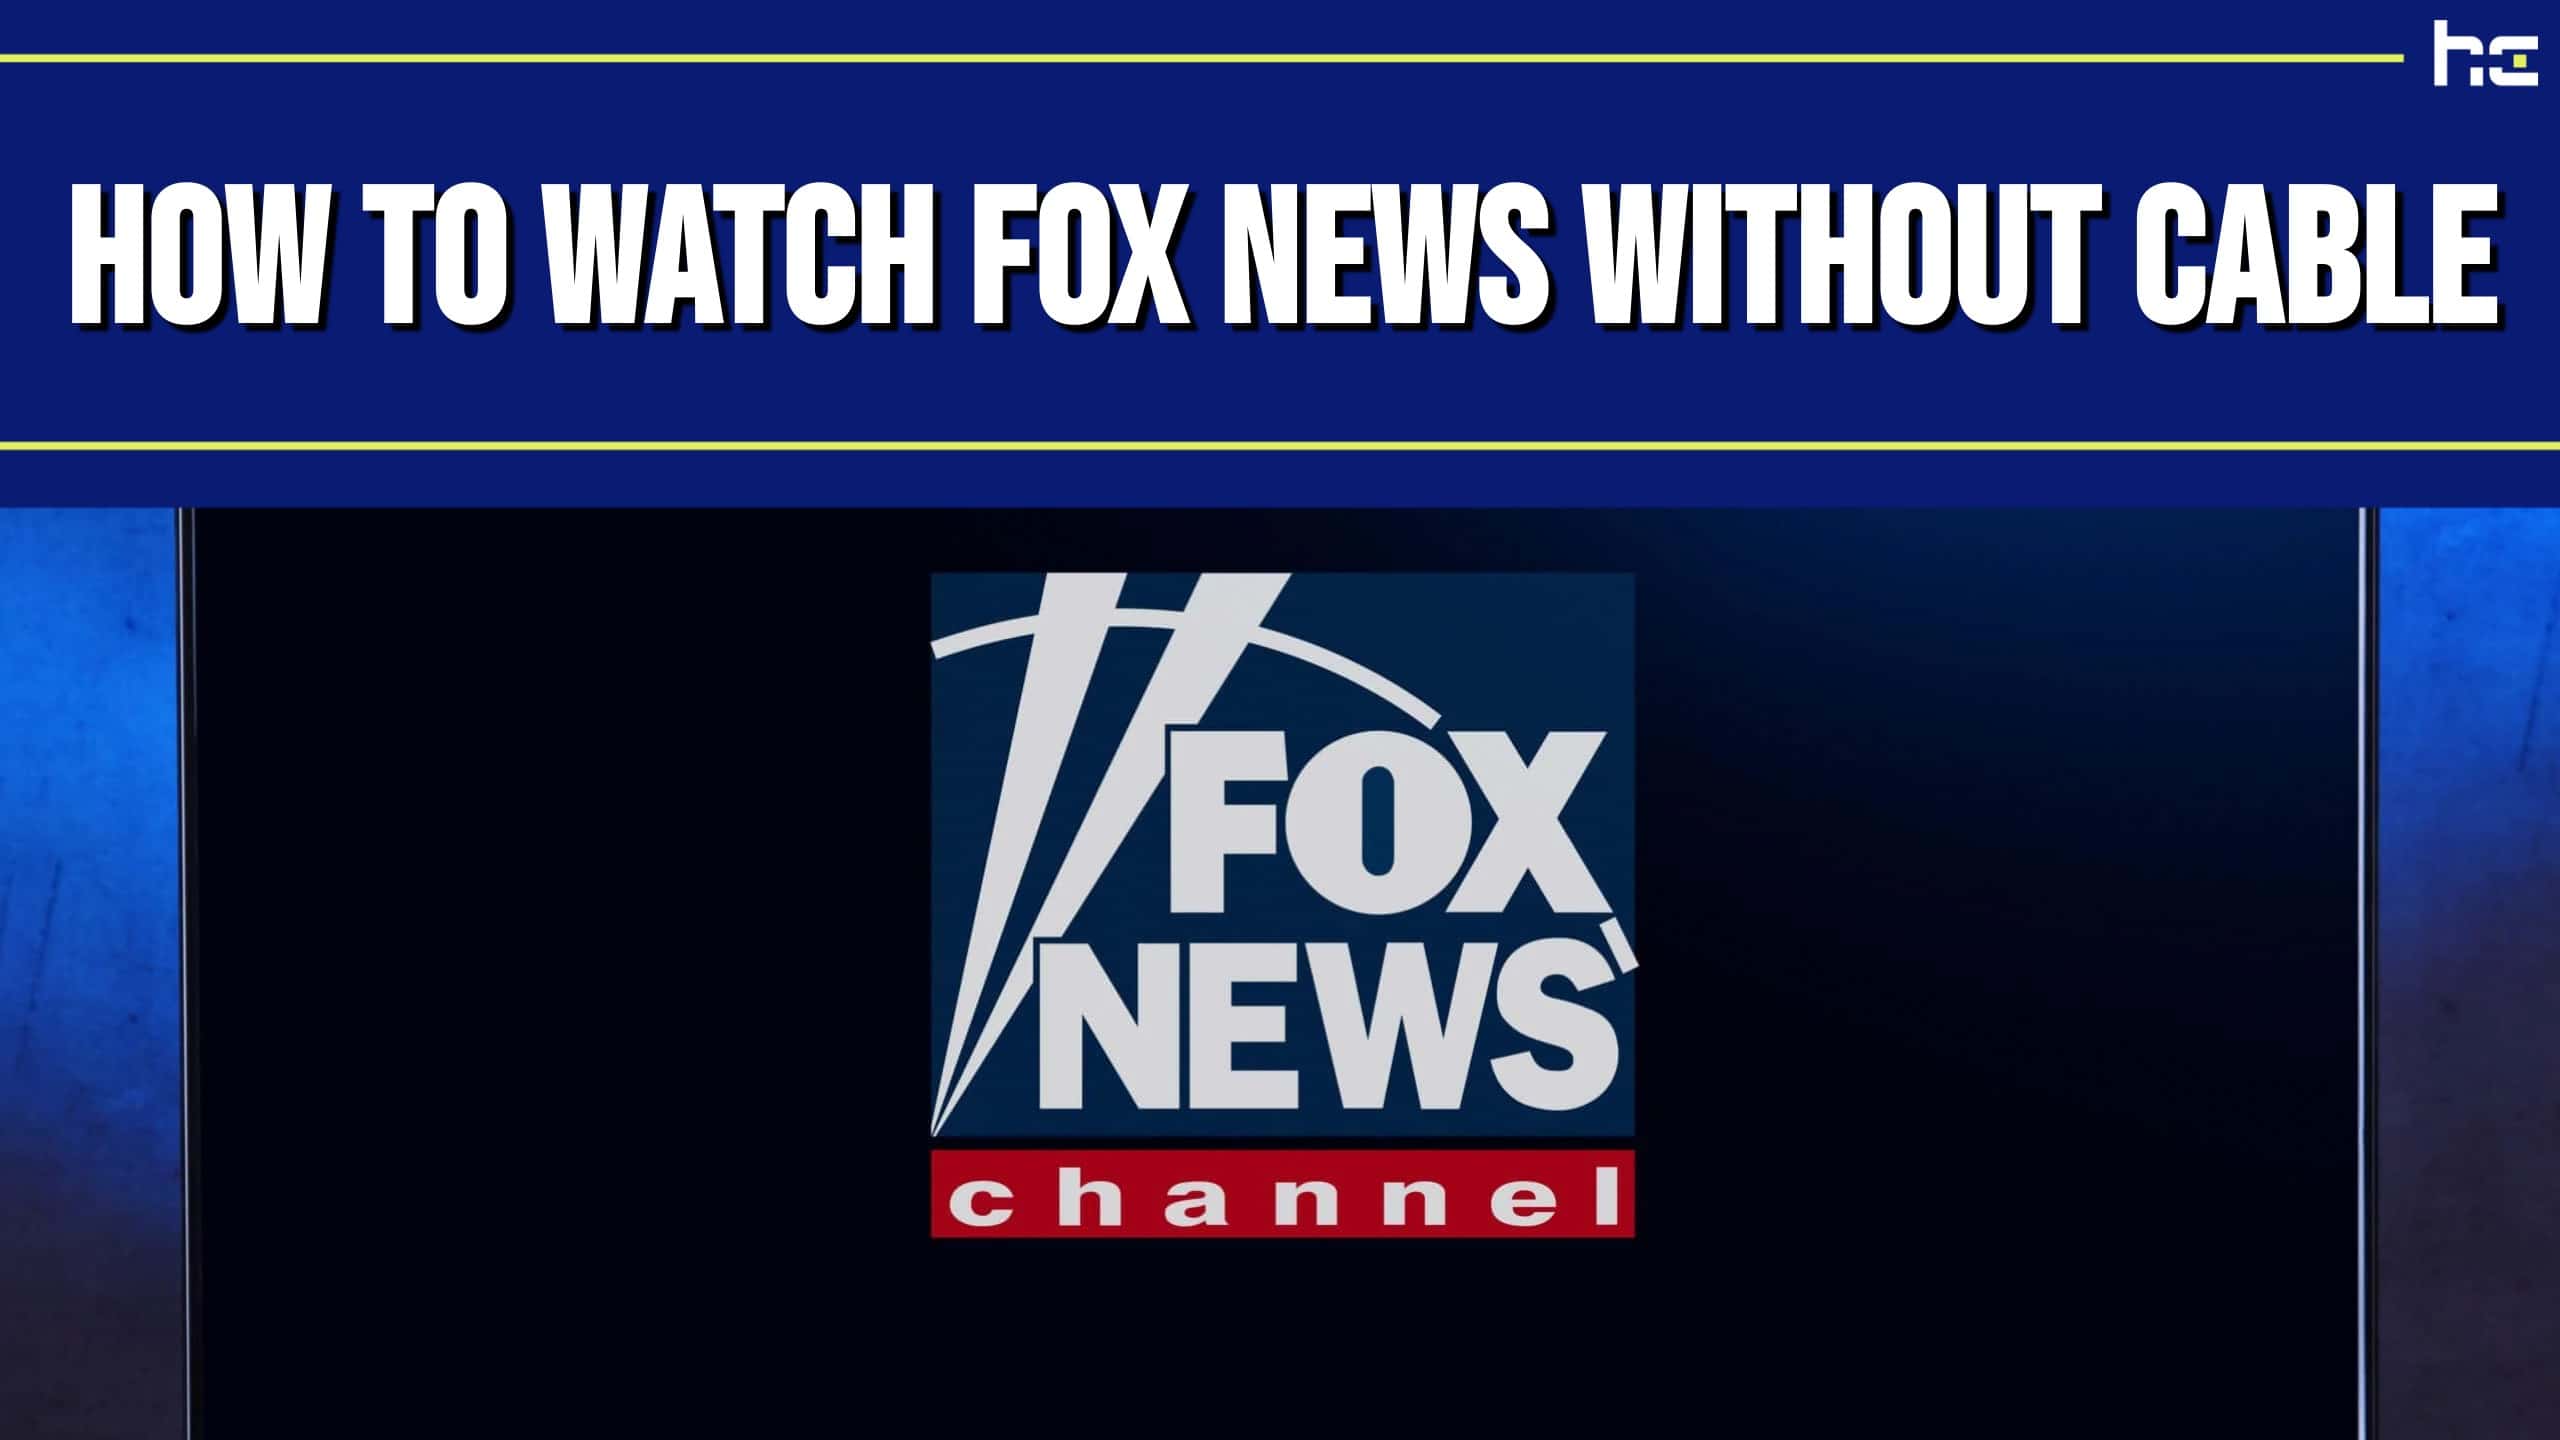 Fox News logo on image generator background